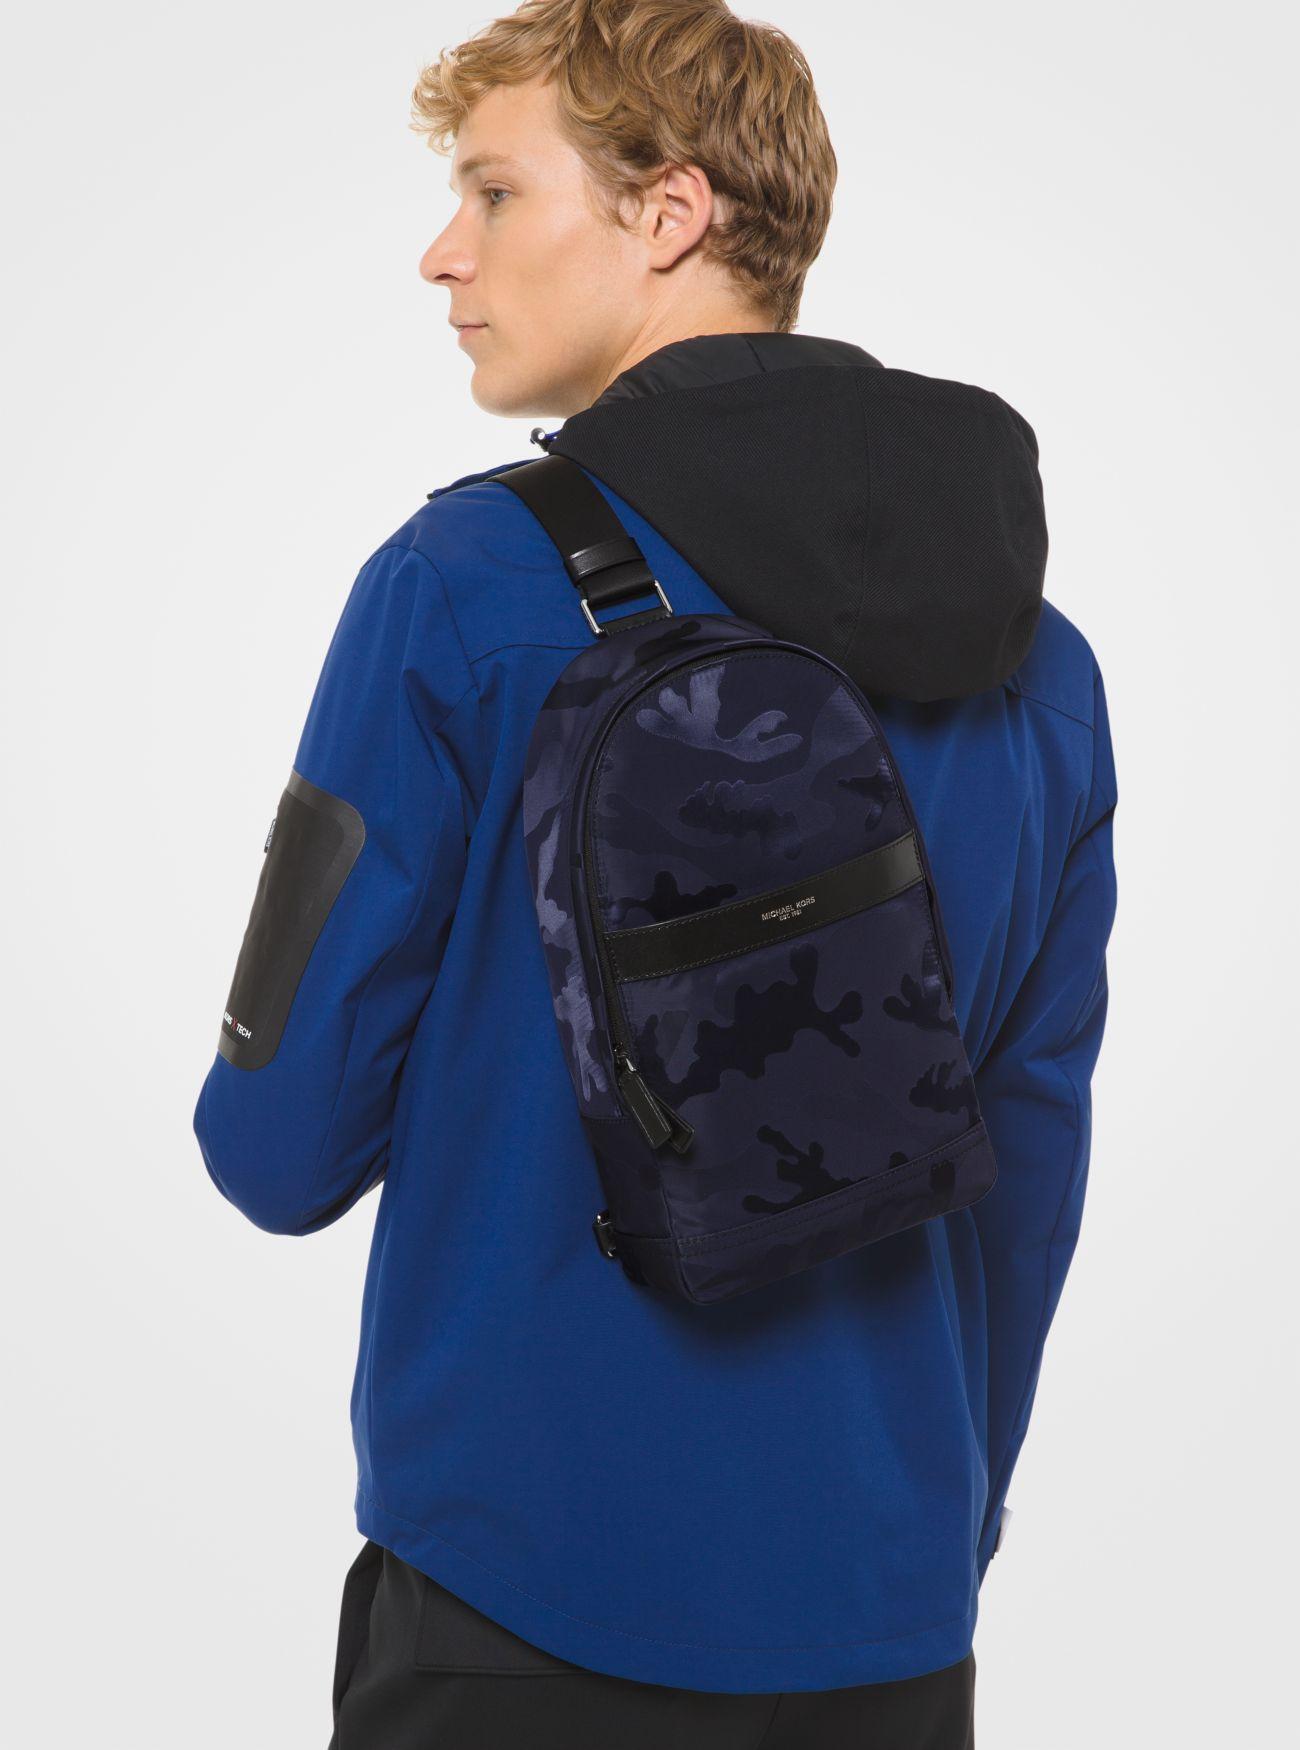 Michael Kors Men's Russel Leather Ocean Blue Medium Sling Pack Bag  